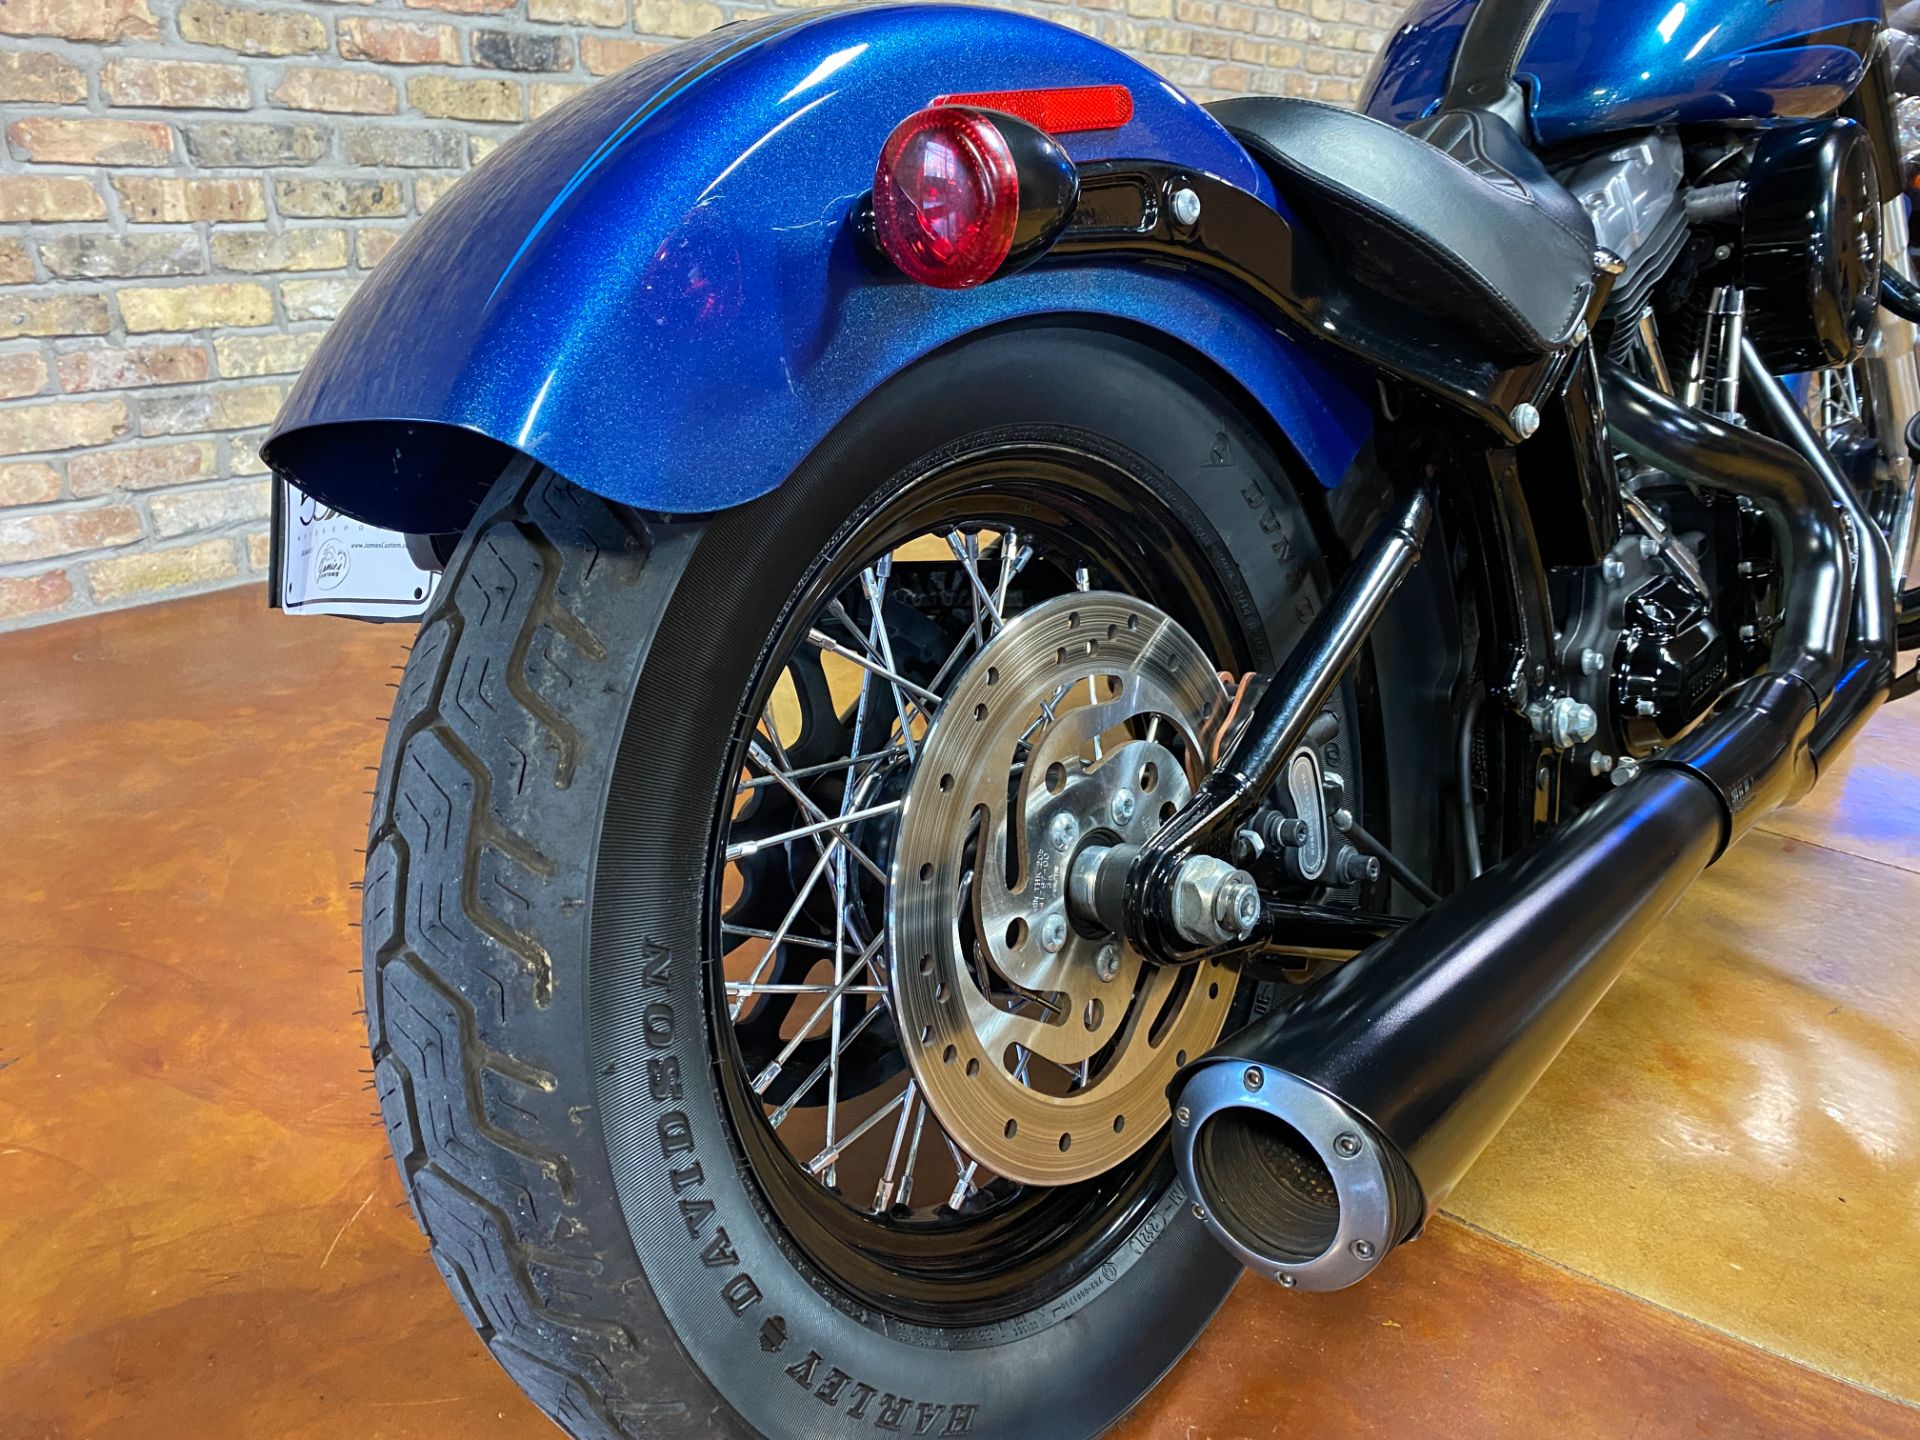 2014 Harley-Davidson Softail Slim® in Big Bend, Wisconsin - Photo 5